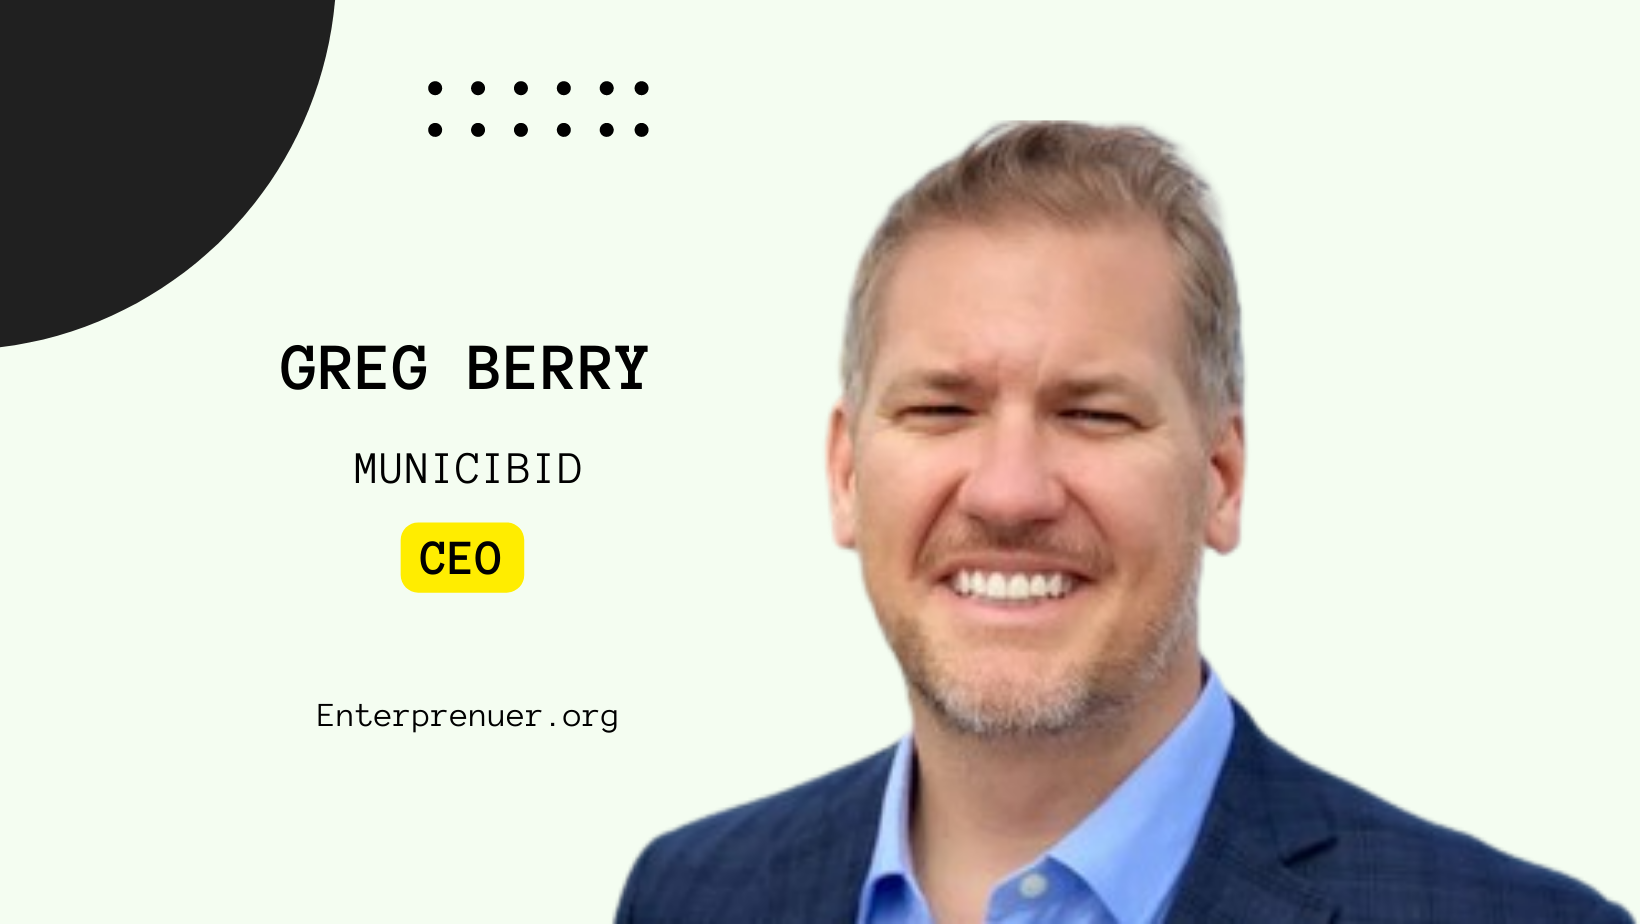 Greg Berry CEO of Municibid